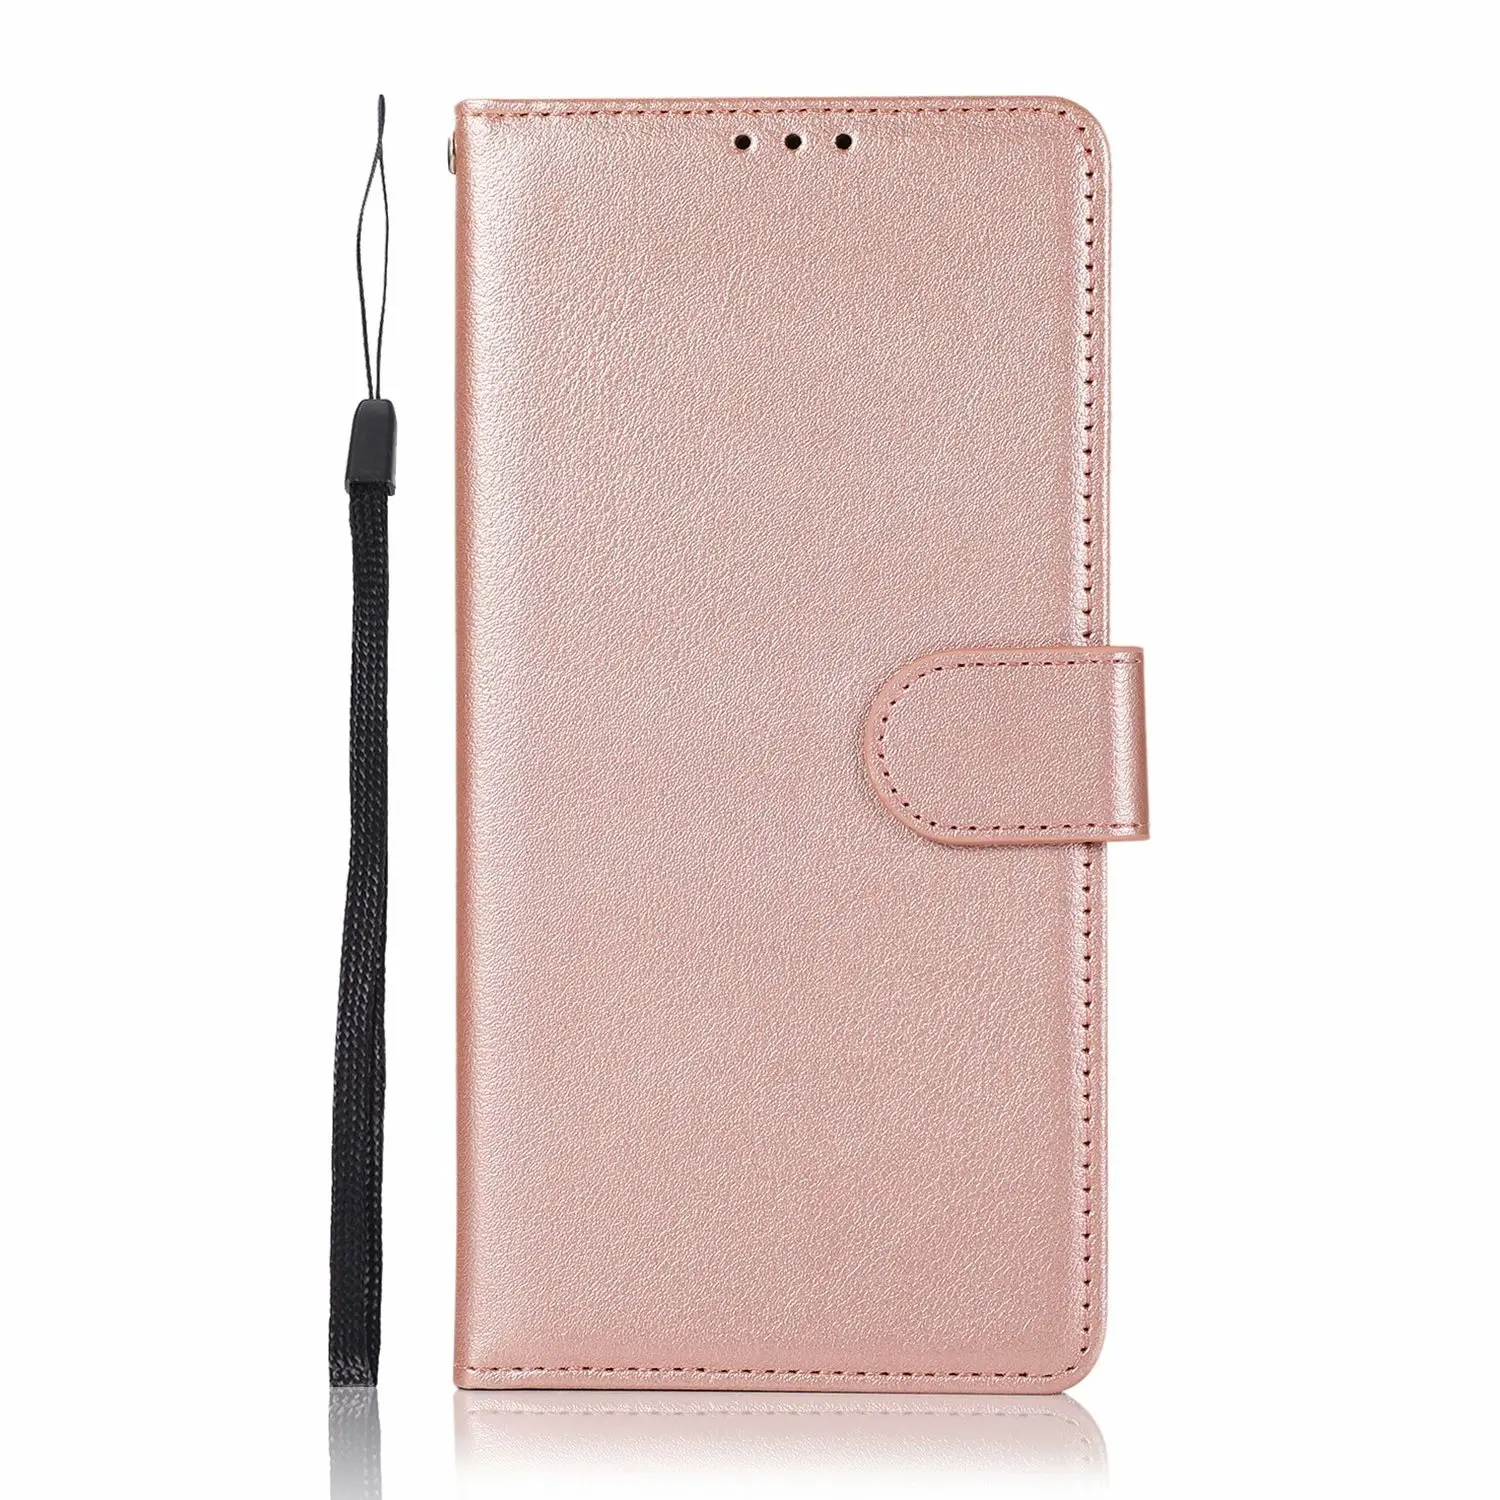 Flip Wallet Case for Xiaomi Redmi Note 9 8 7 6 5 Pro 9A 9C 8A 7A 6A 5A 4A 4X 5 Plus Pocophone F1 Leather Case Protect Cover